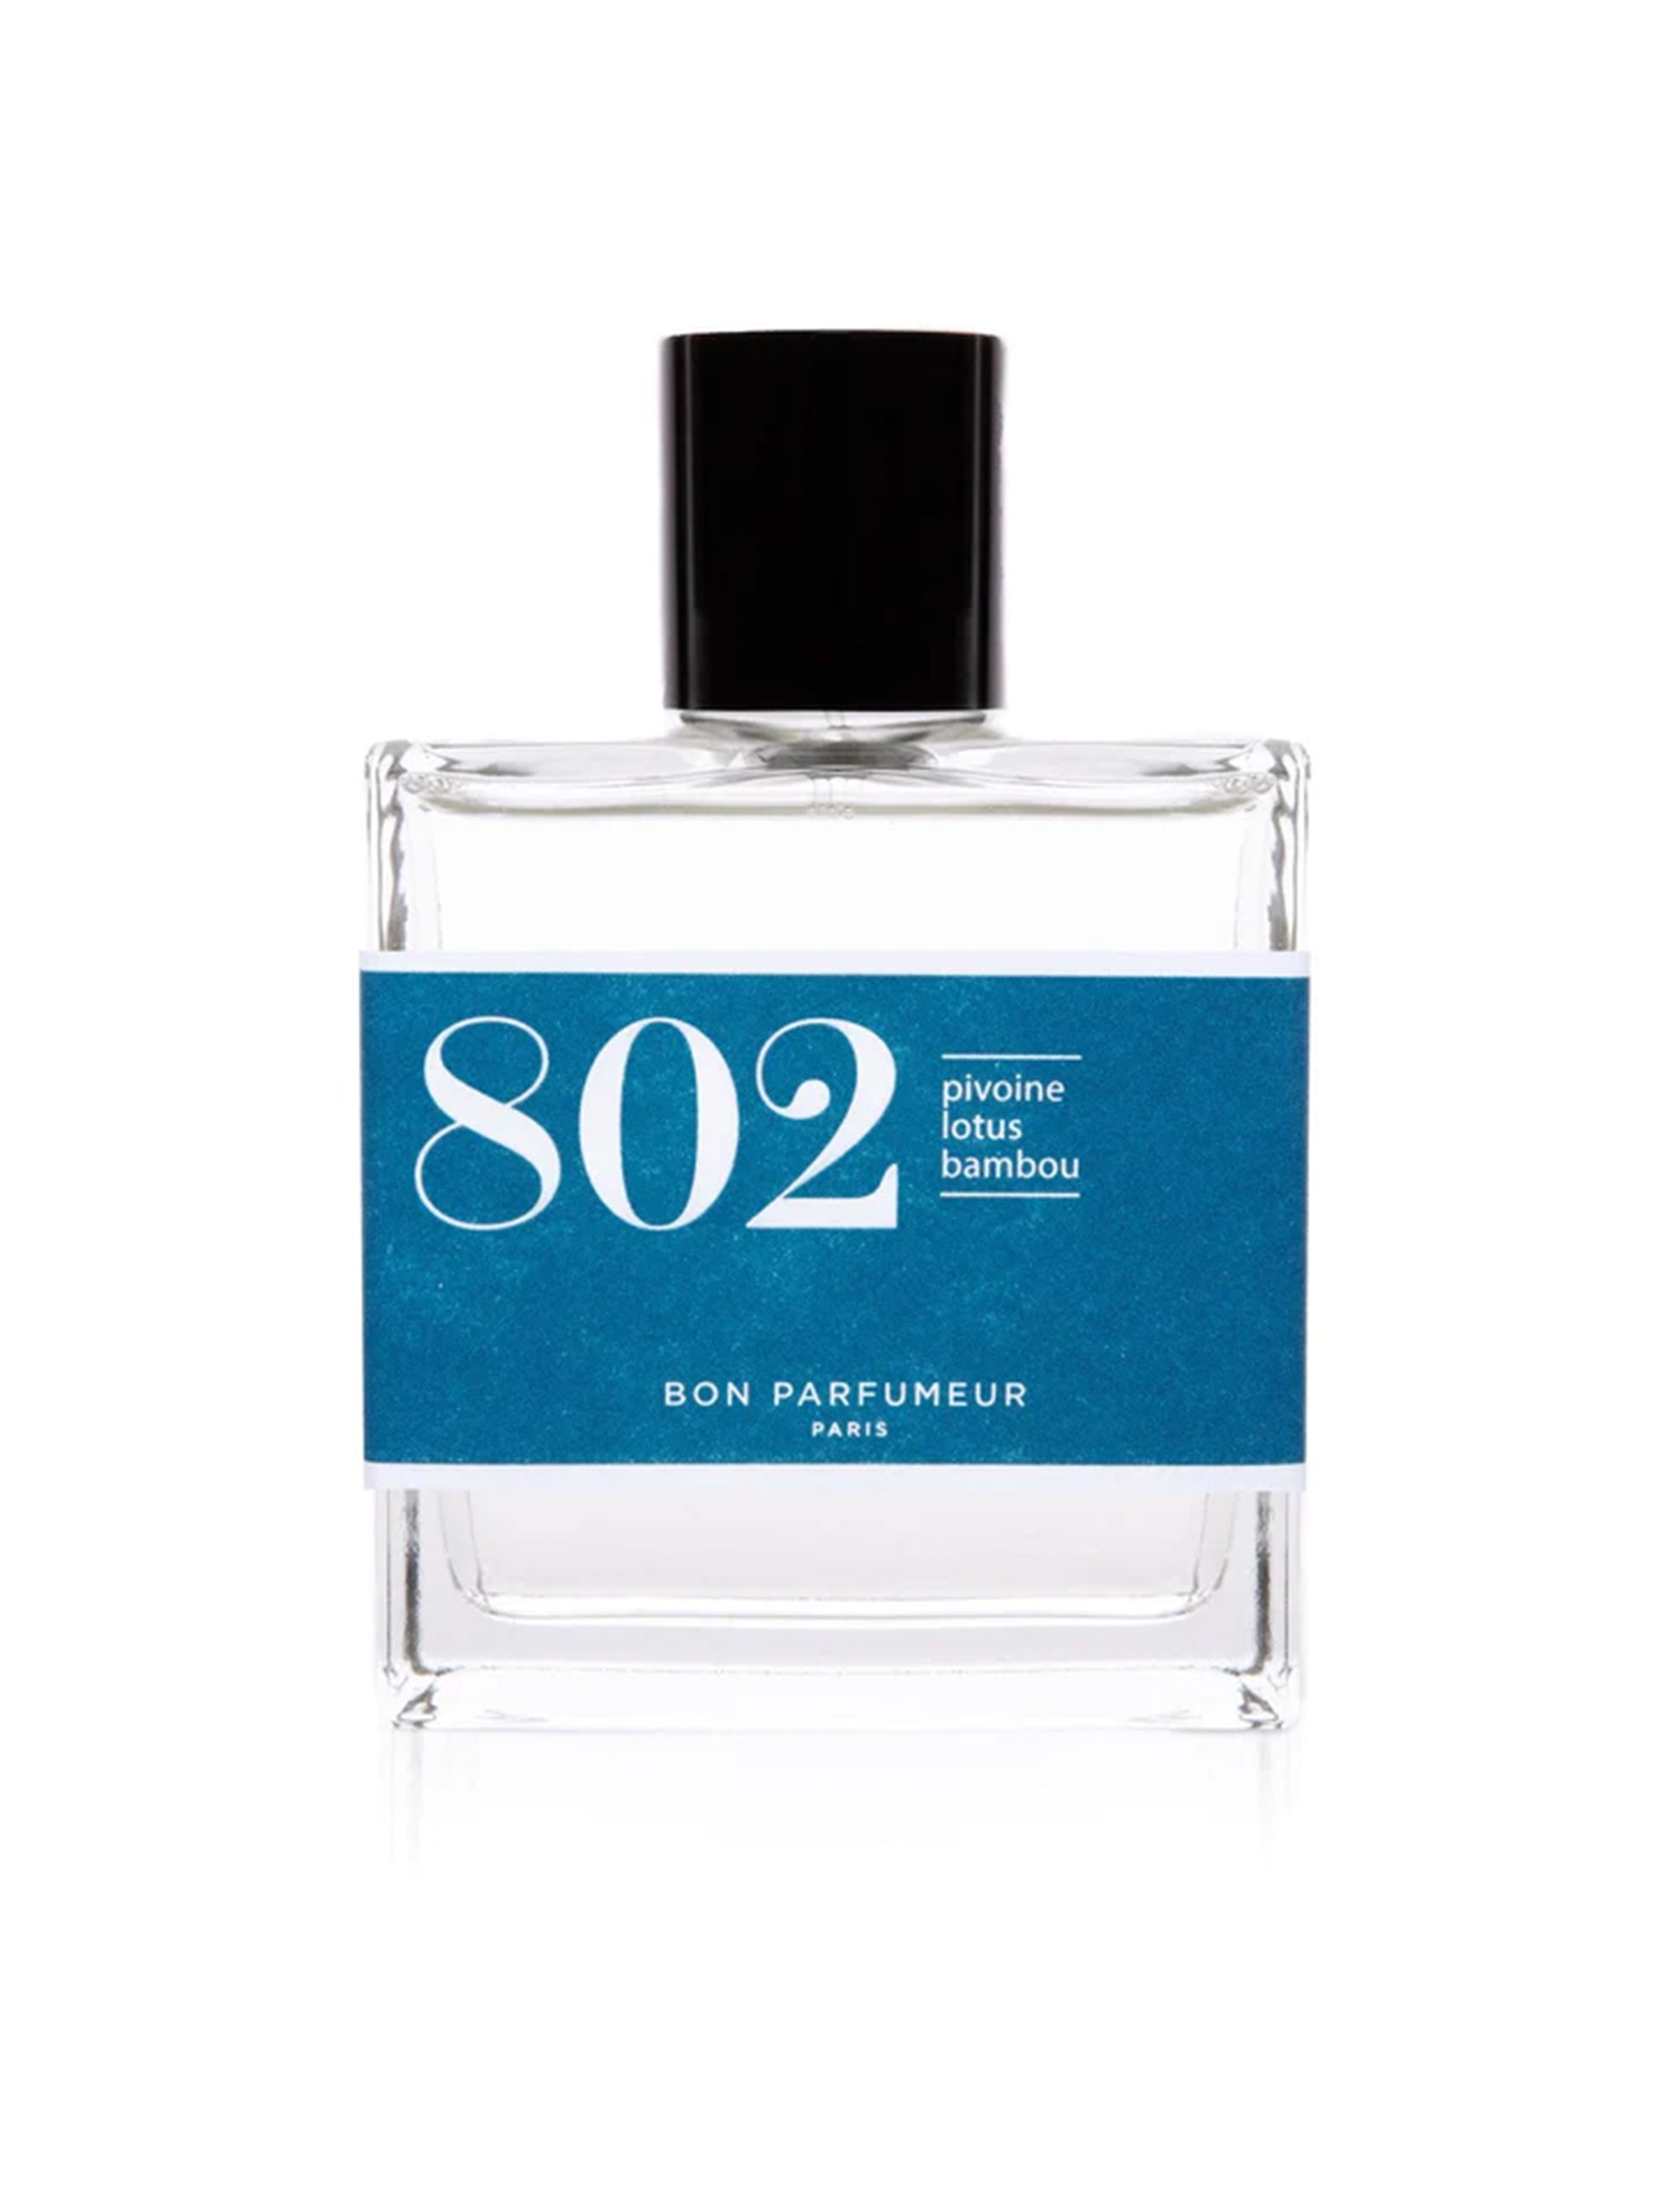 Eau de parfum 802 with peony, lotus and bamboo